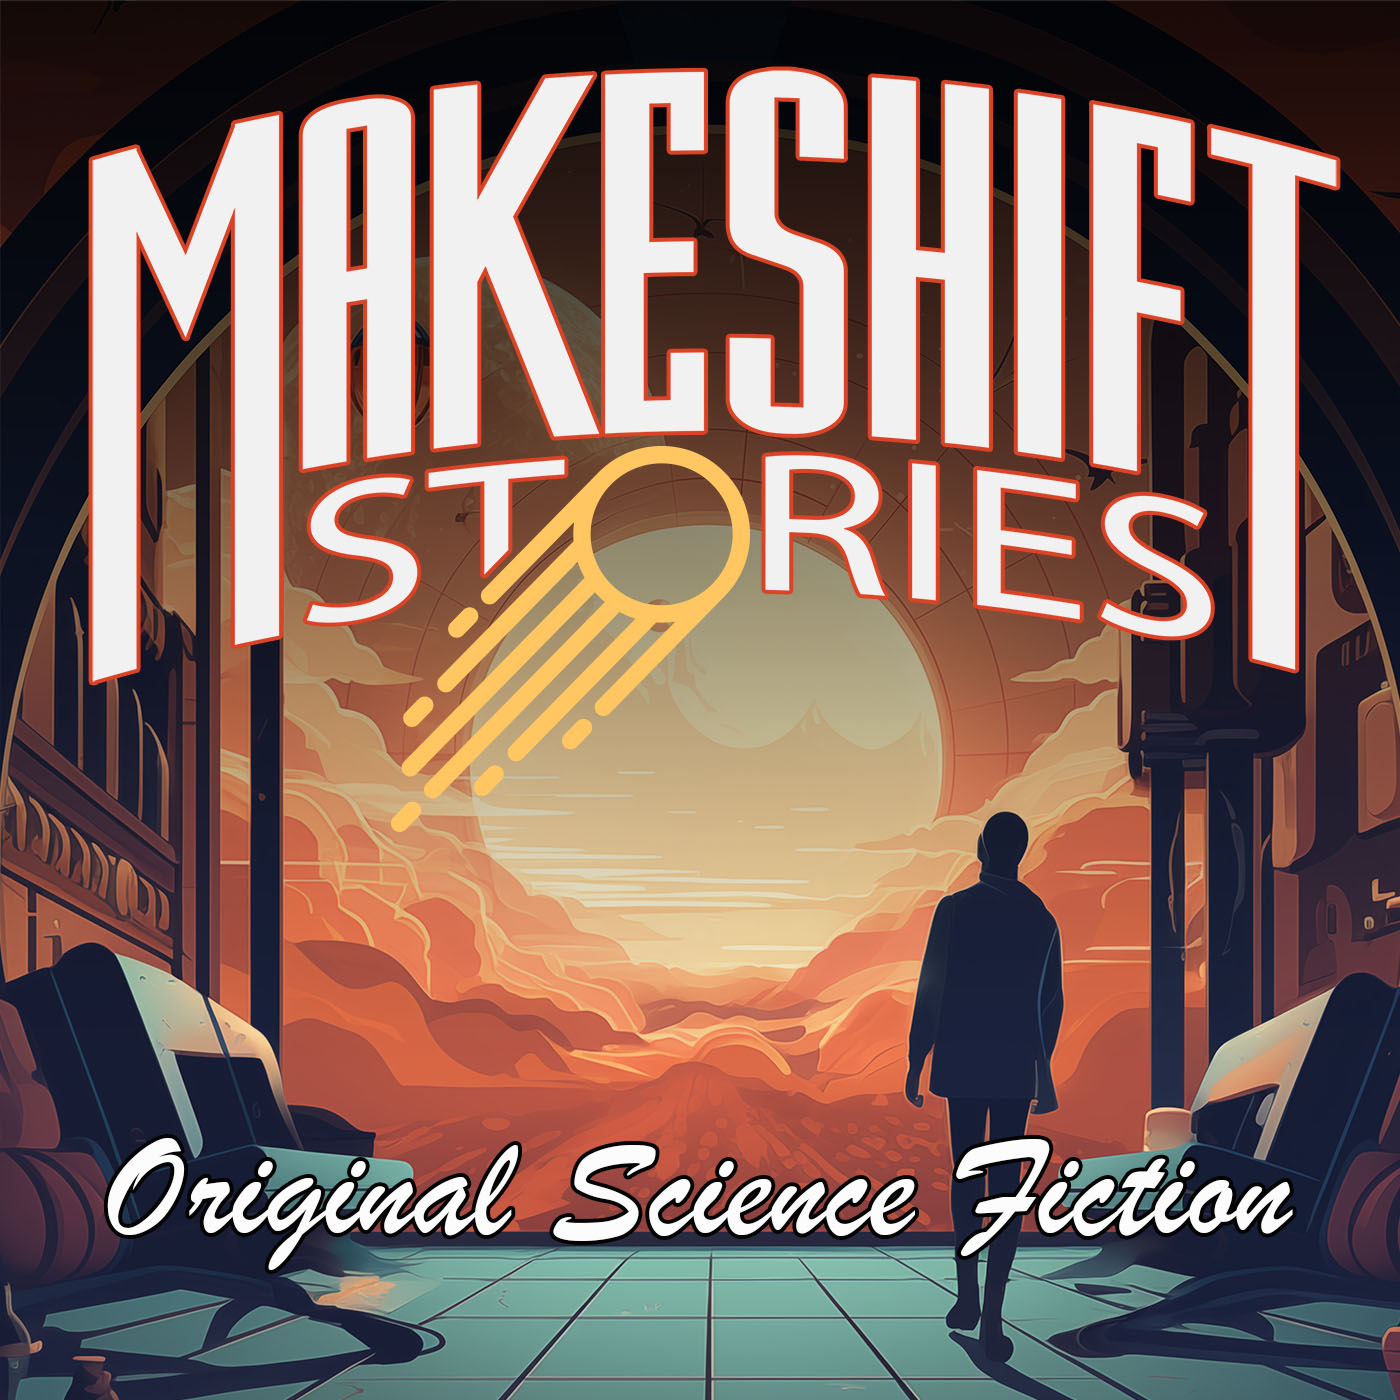 Original Science Fiction - Makeshift Stories